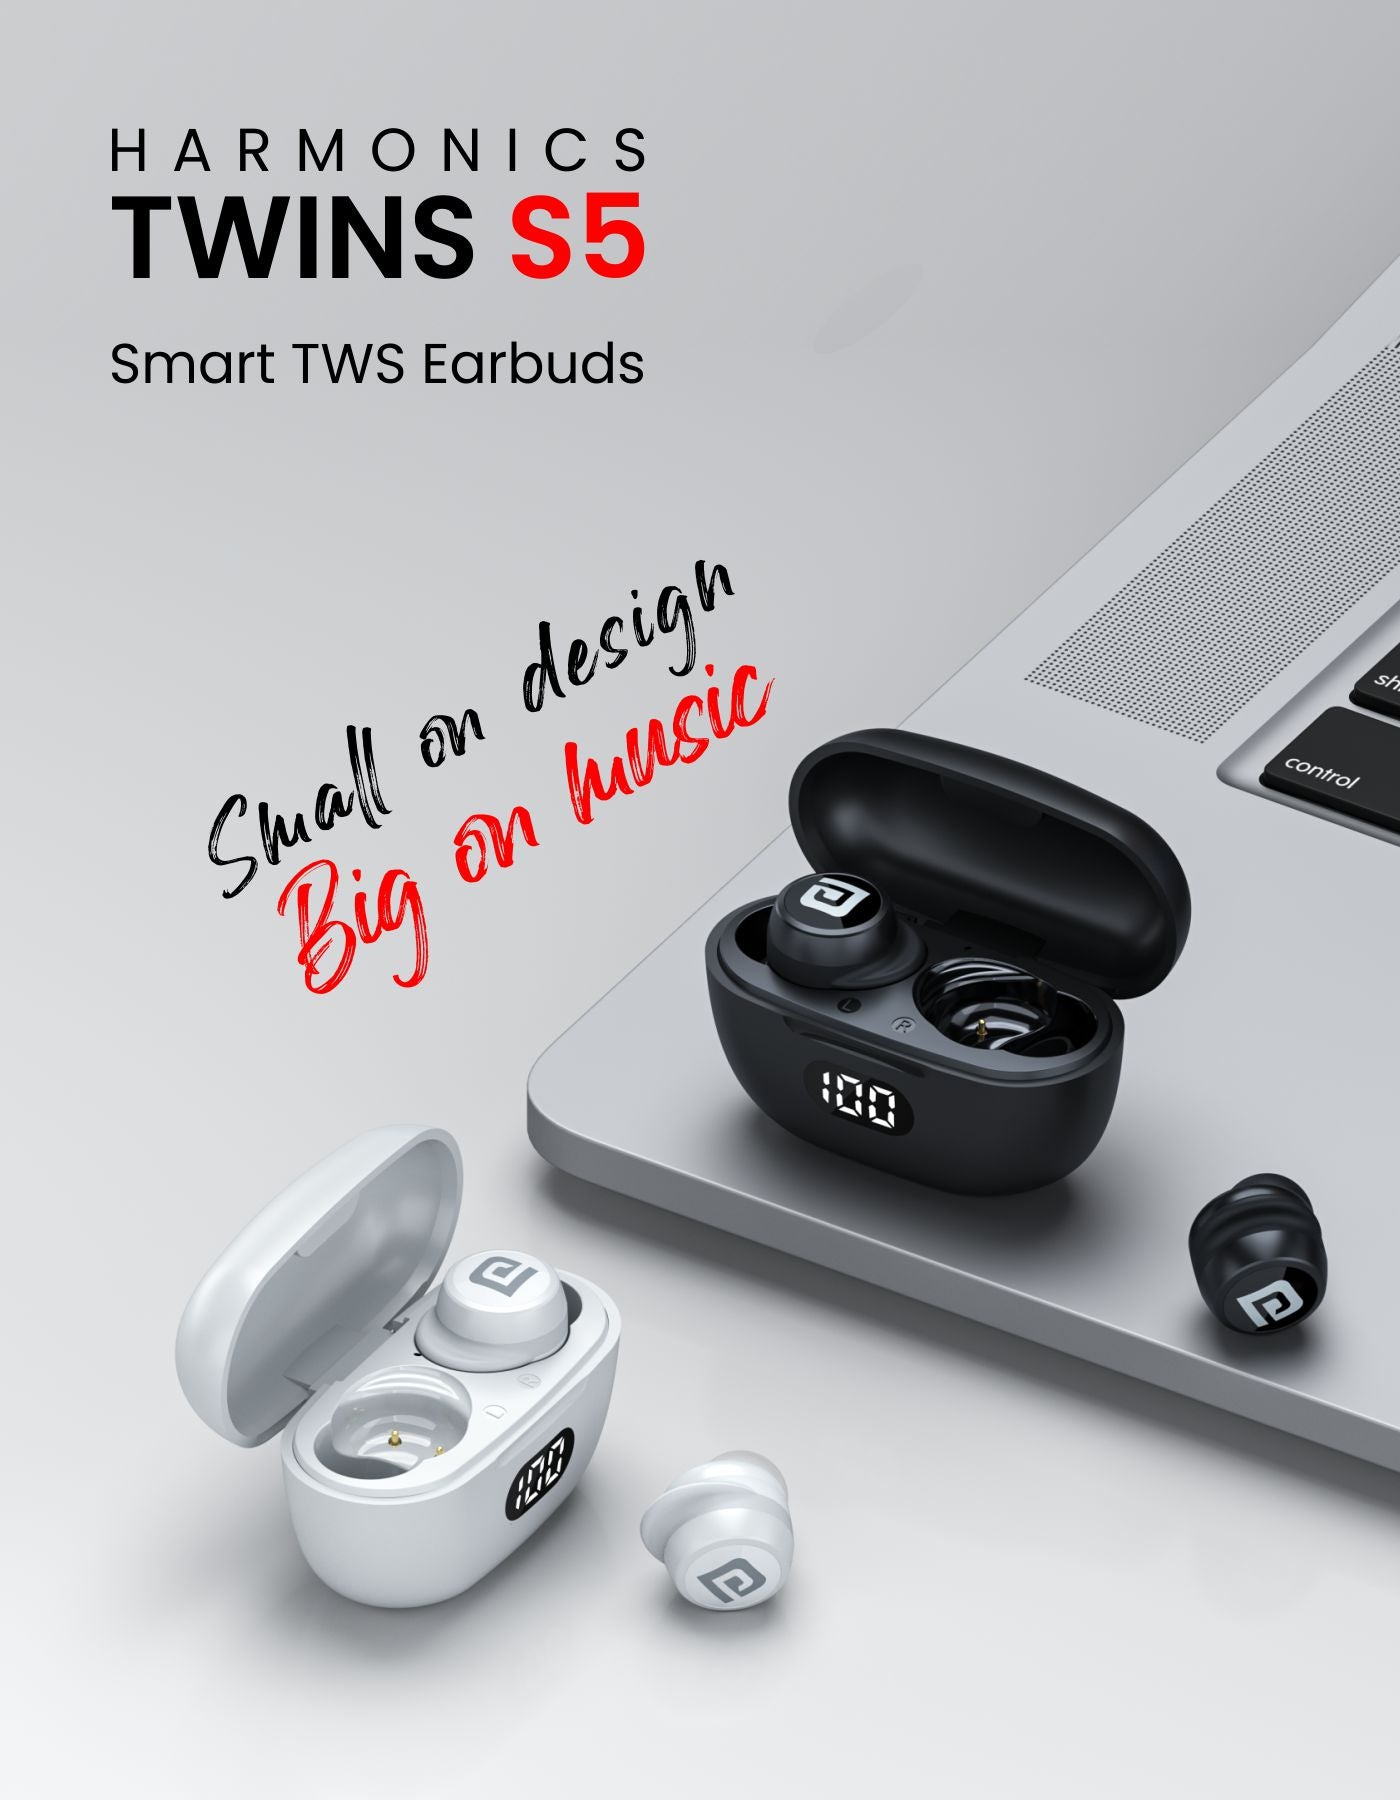 Portronics Harmonics Twins S5 Bluetooth wireless earbuds with LED display